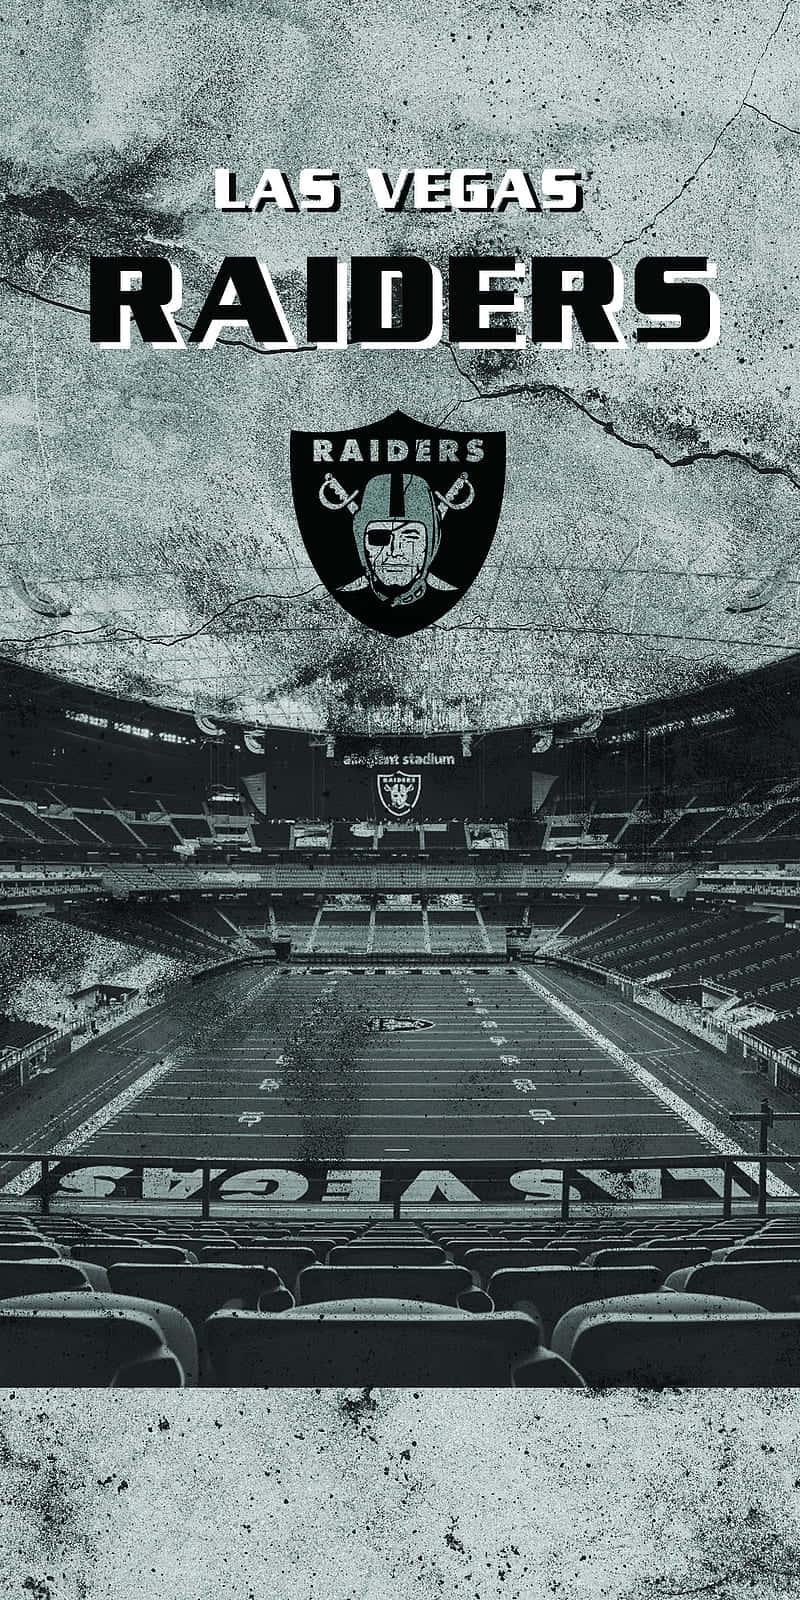 Las Vegas Raiders Stadium Artwork Wallpaper